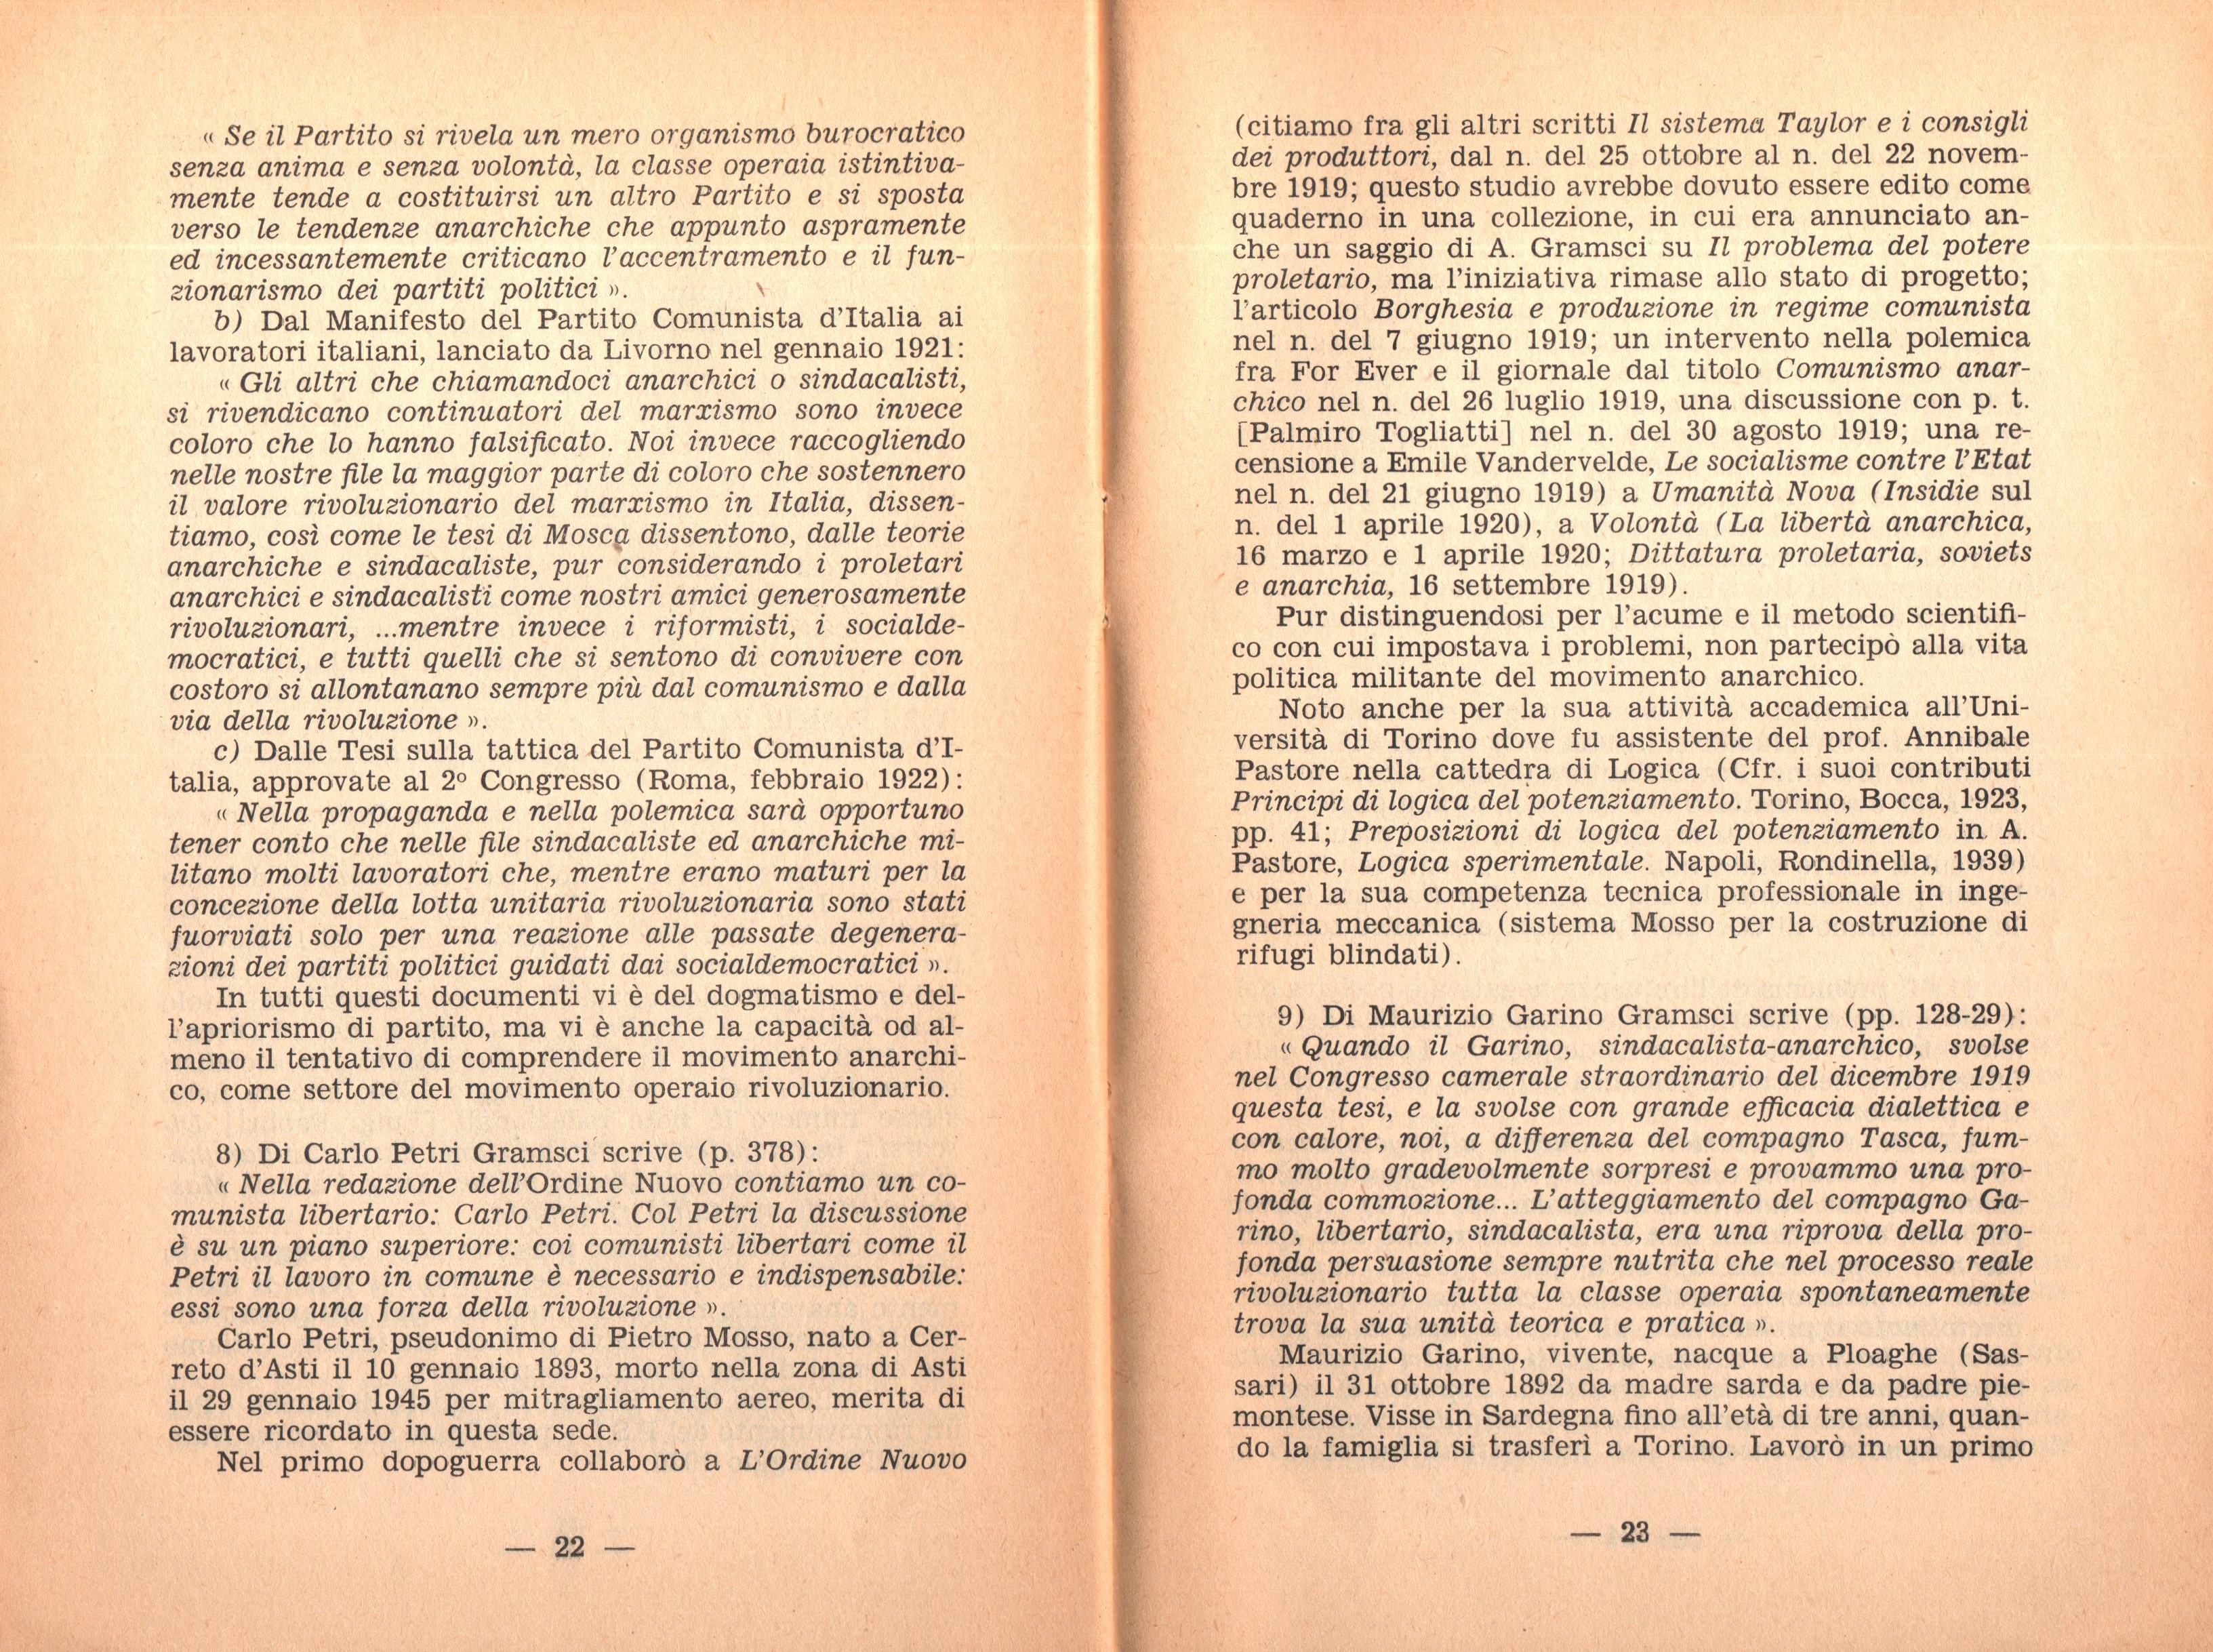 Pier Carlo Masini, Antonio Gramsci - pag. 13